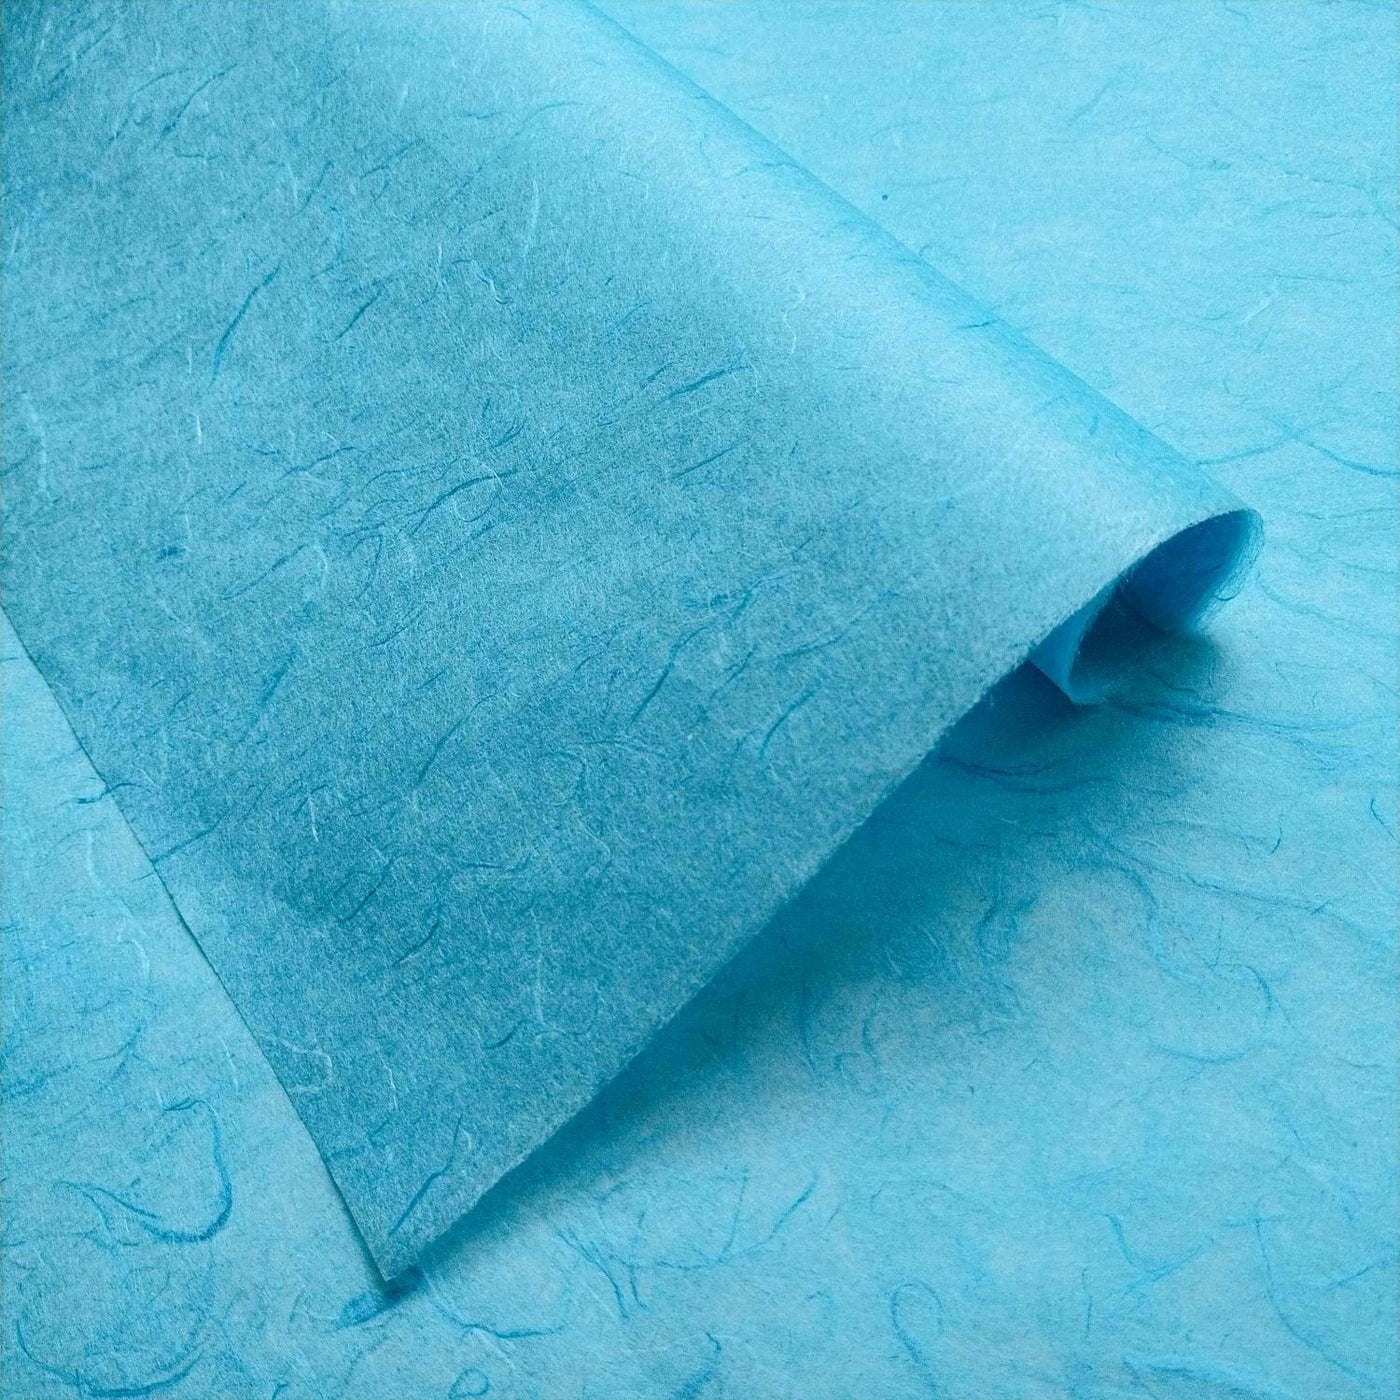 Unryu Kozo Mulberry Paper (Atoll Blue)